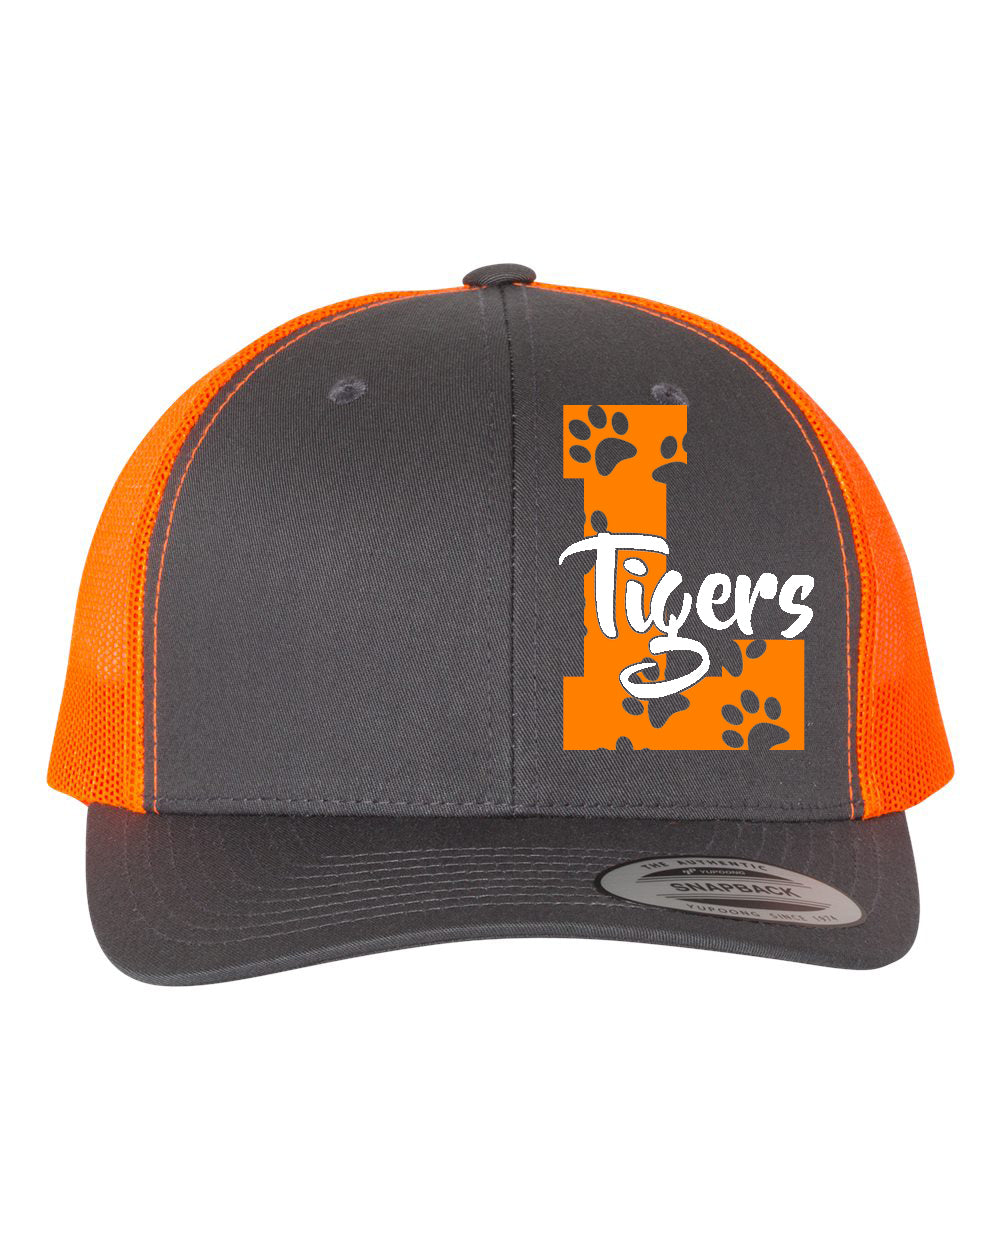 Lafayette Tigers Design 5 Trucker Hat